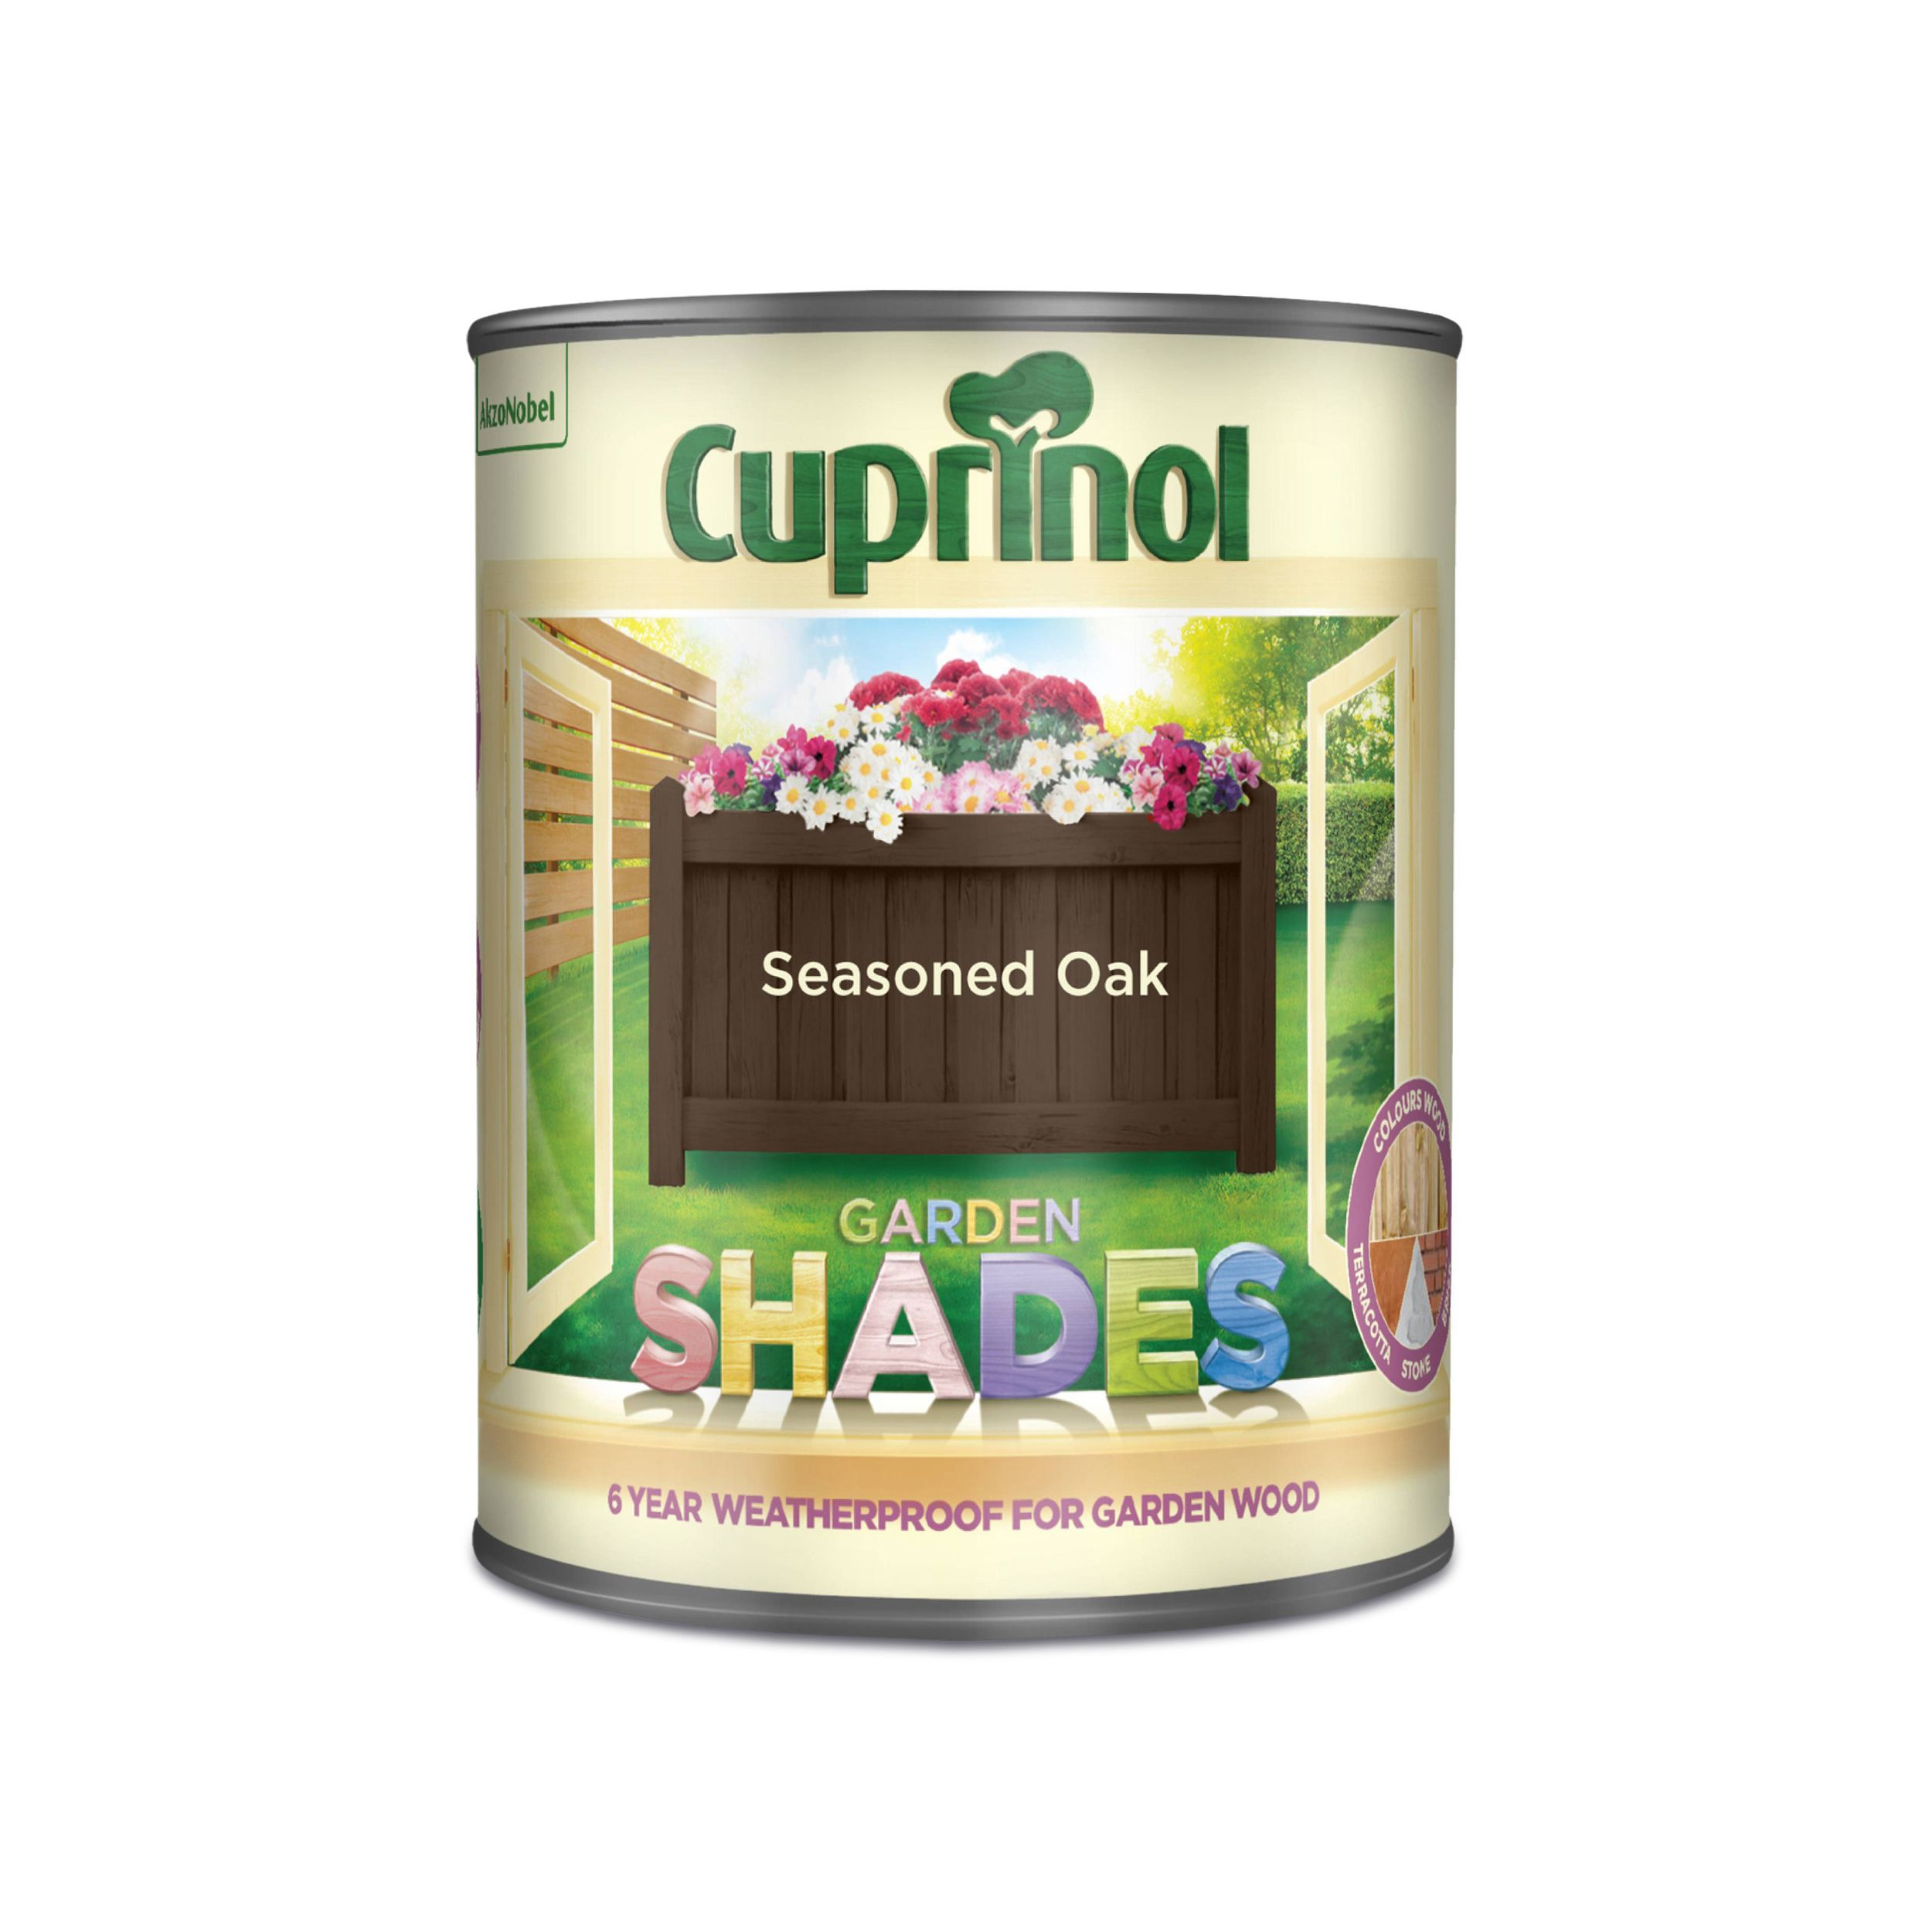 Cuprinol Garden shades Seasoned oak Matt Multi-surface Exterior Wood paint, 1L